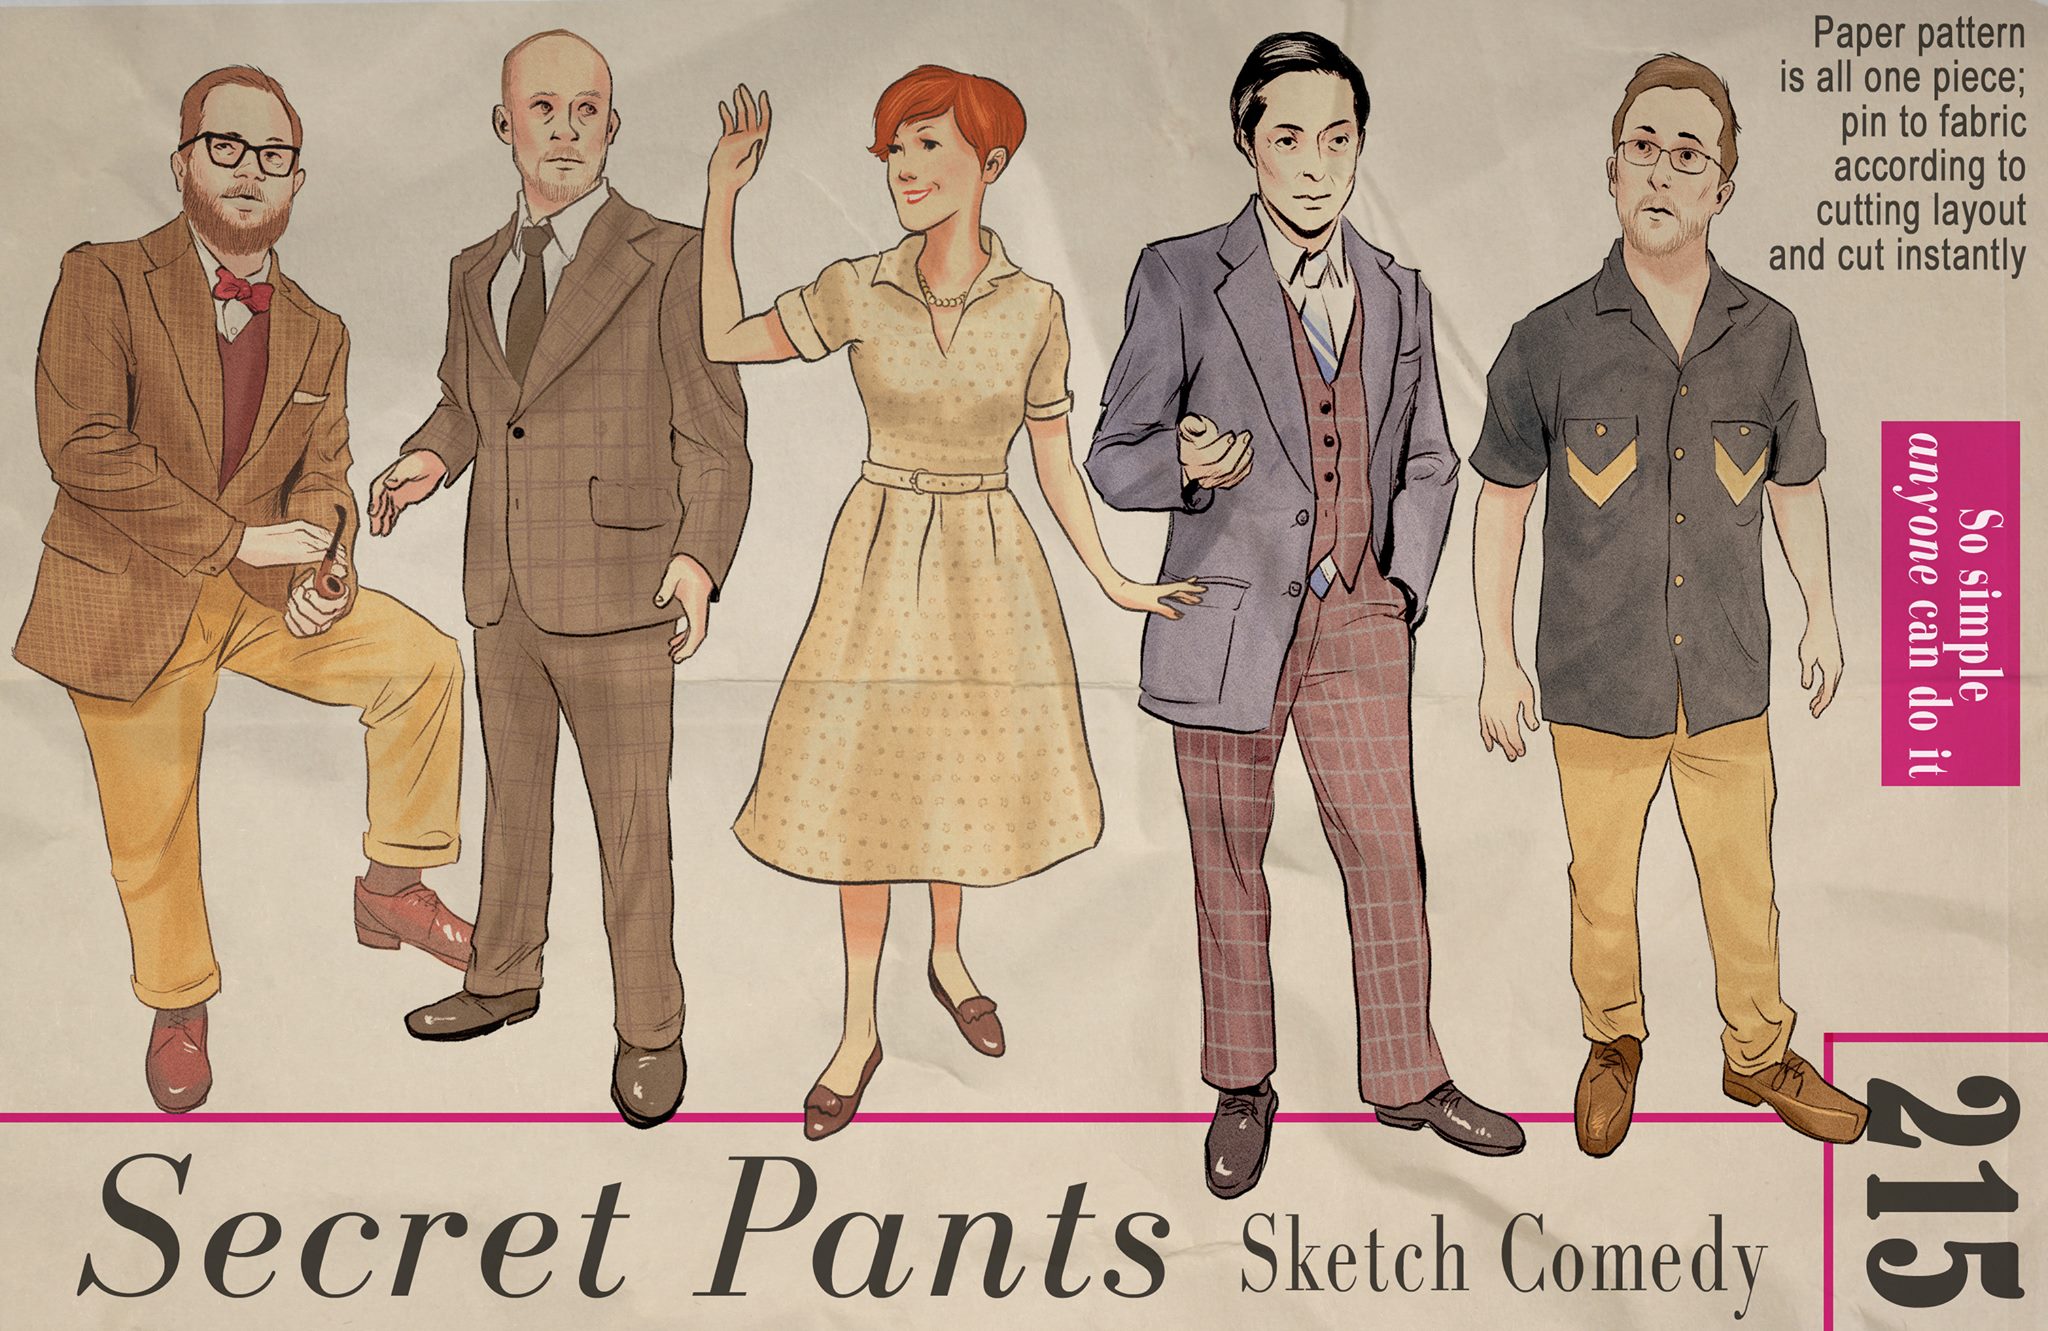 The 20th Anniversary of Secret Pants